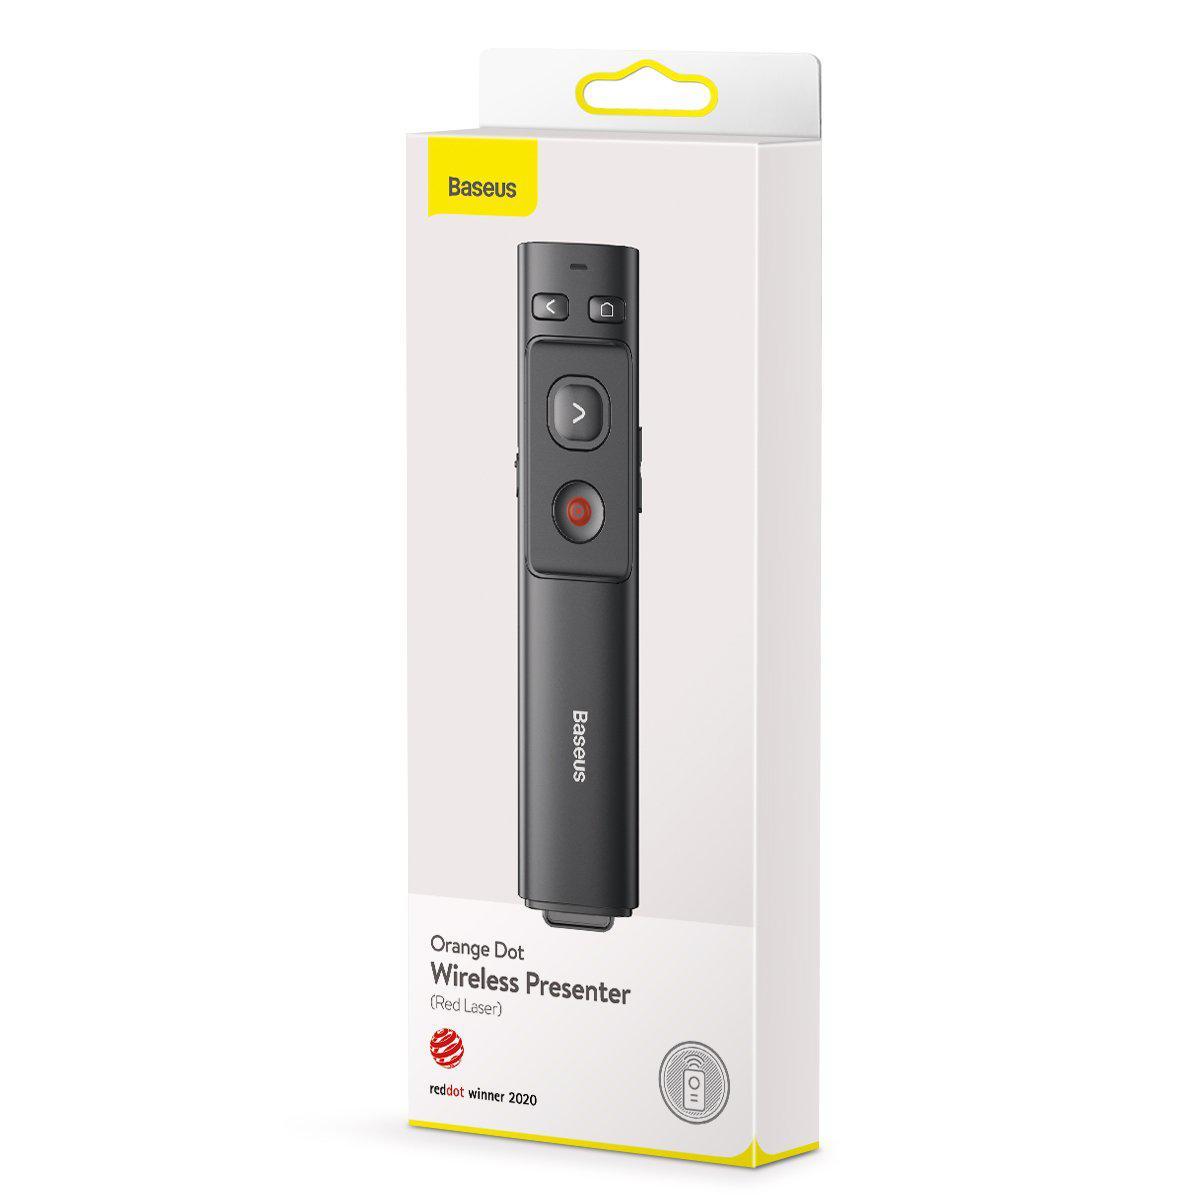 Baseus Orange Dot Wireless Presenter (Red Laser)